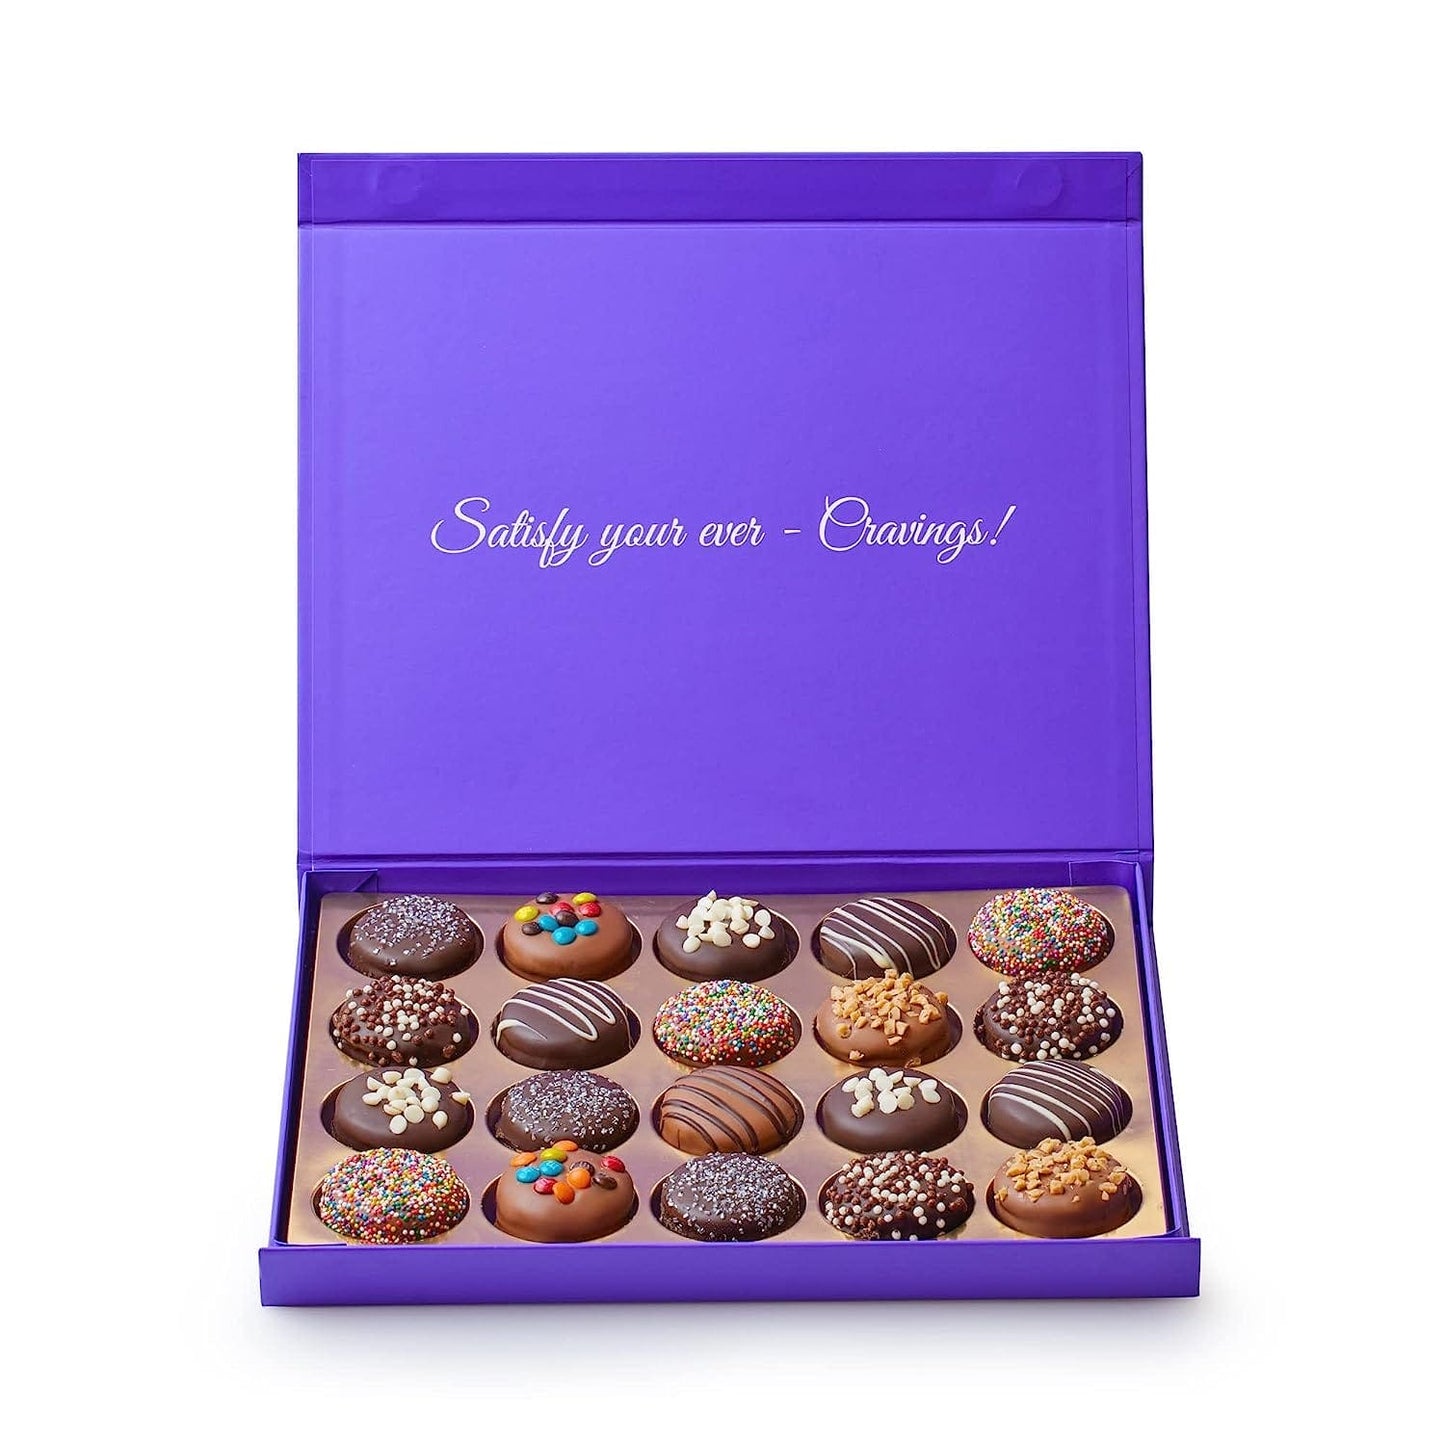 Chocolate Covered Oreos Happy Birthday Gift Box - Cravings by Zoe - Gourmet Chocolate